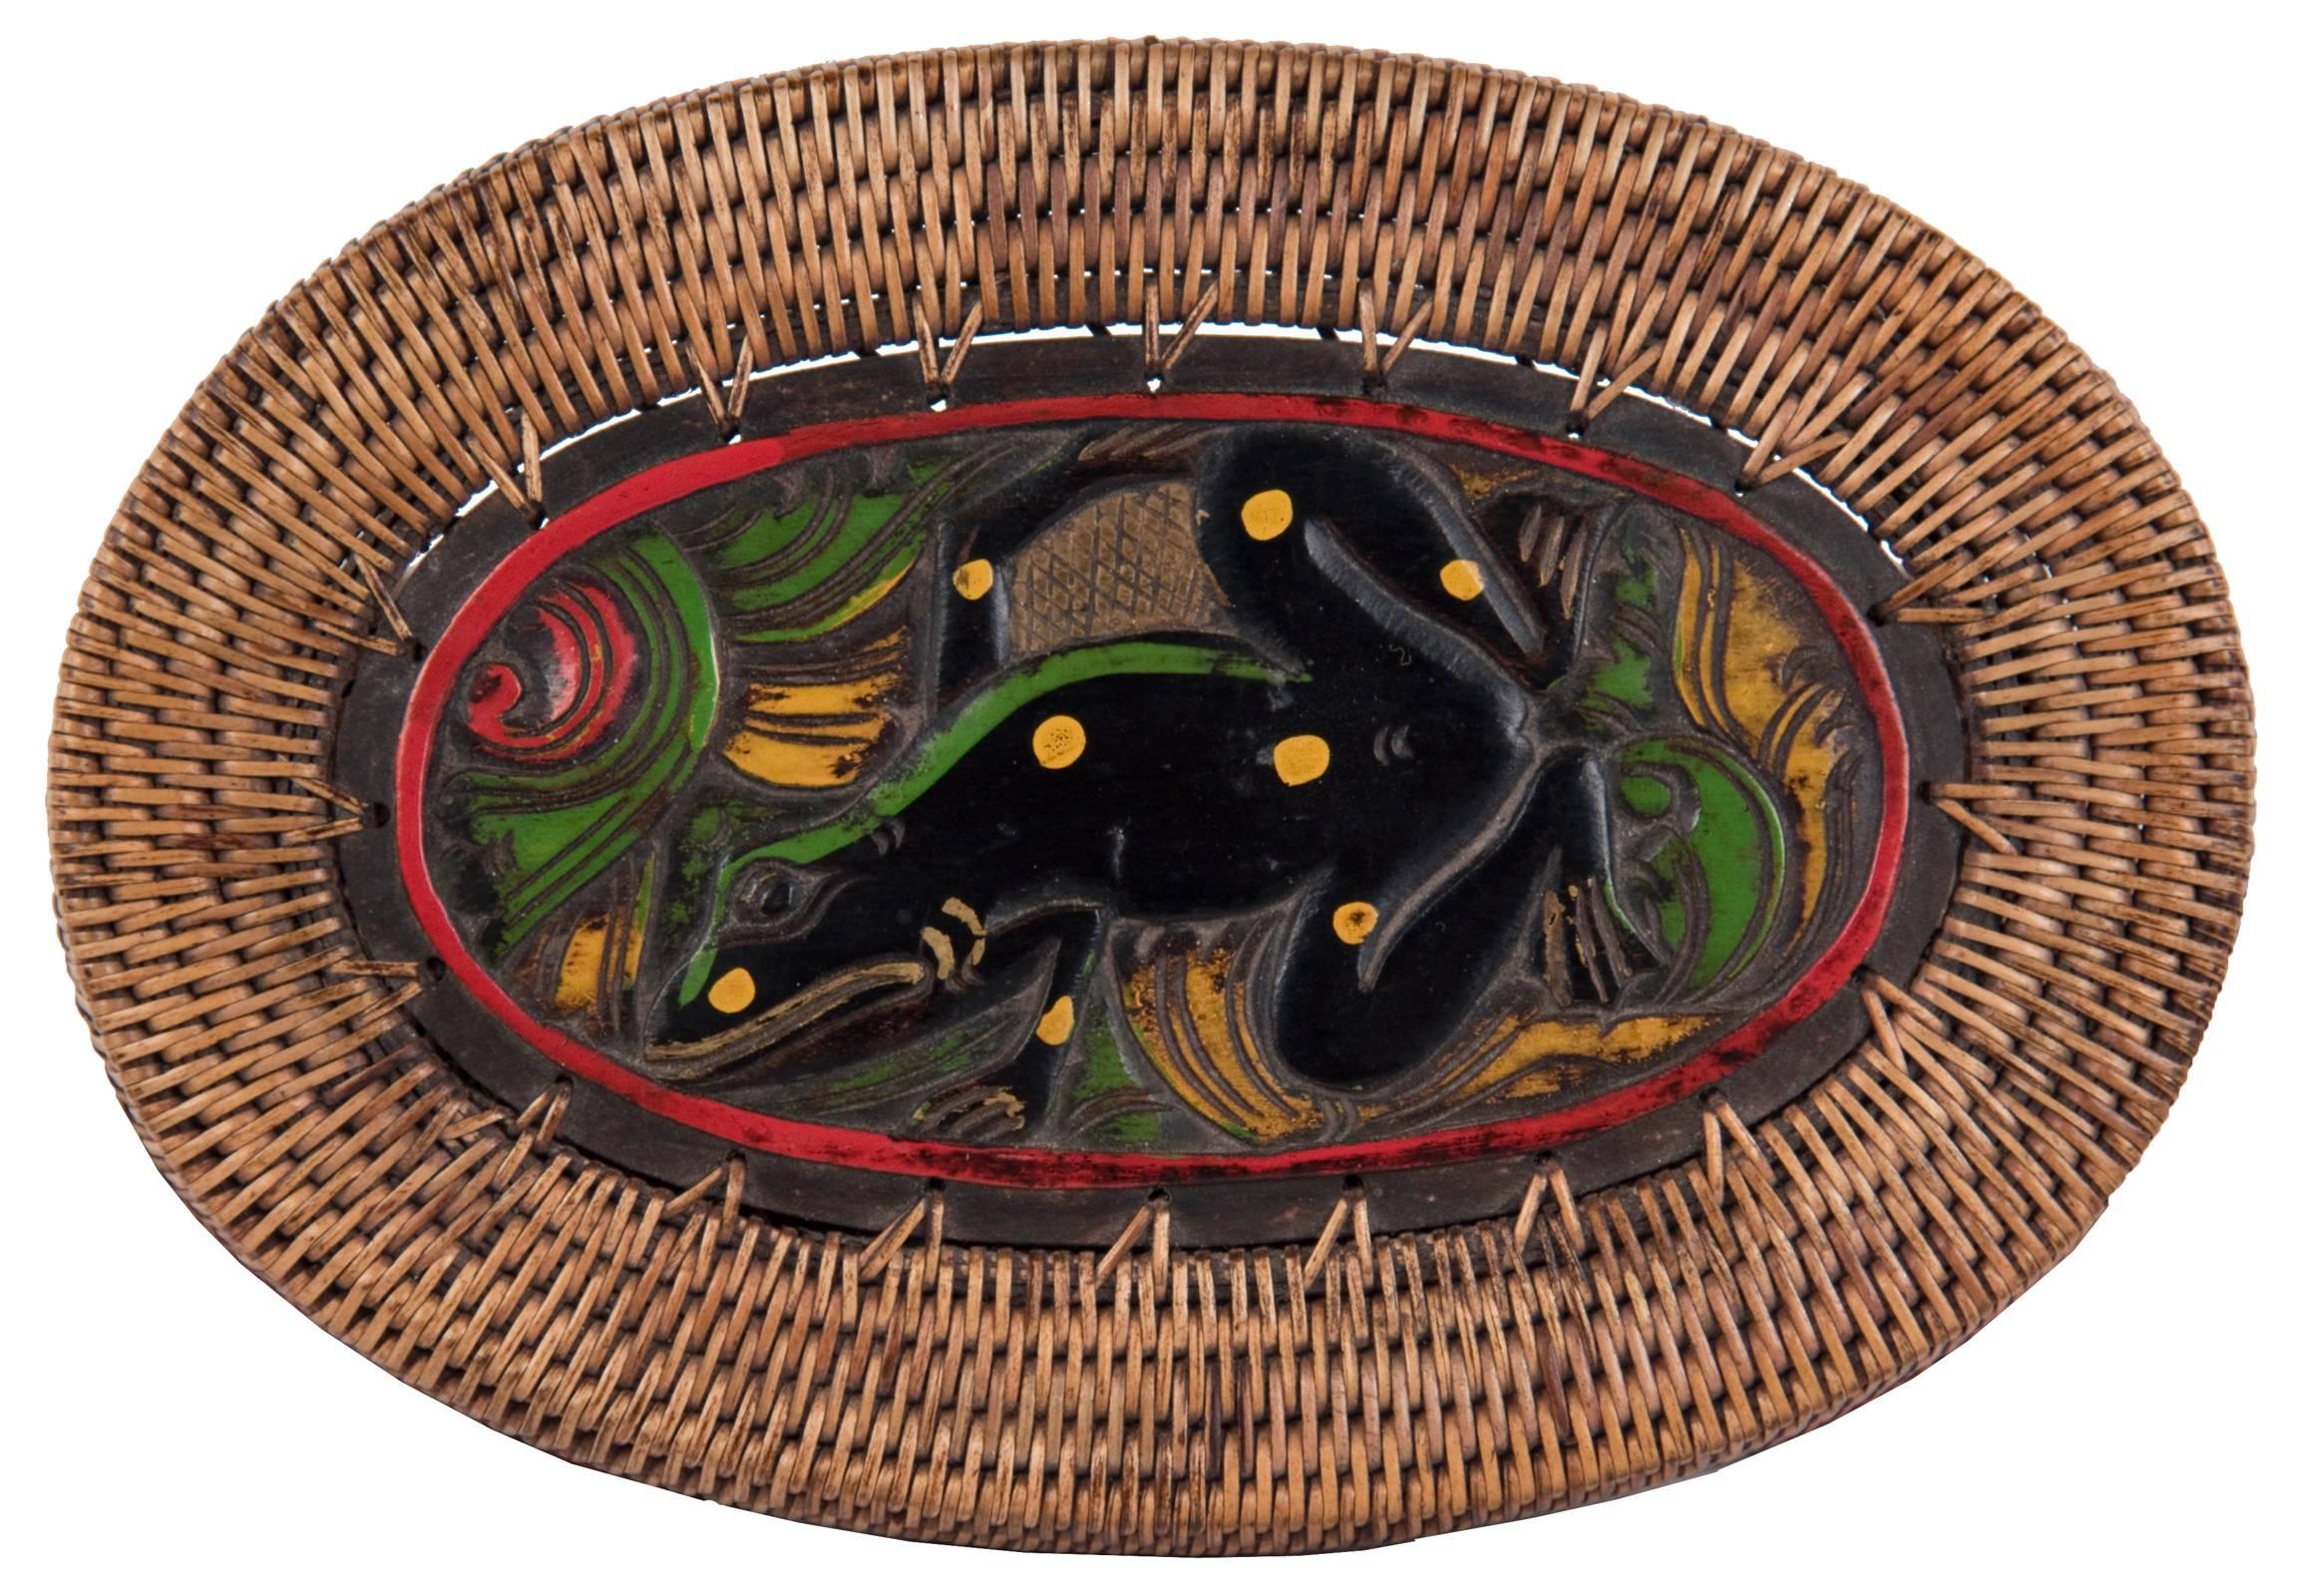 Carved Northwestern Native American Oval Basket Box Lidded with Polychrome Frog Motif